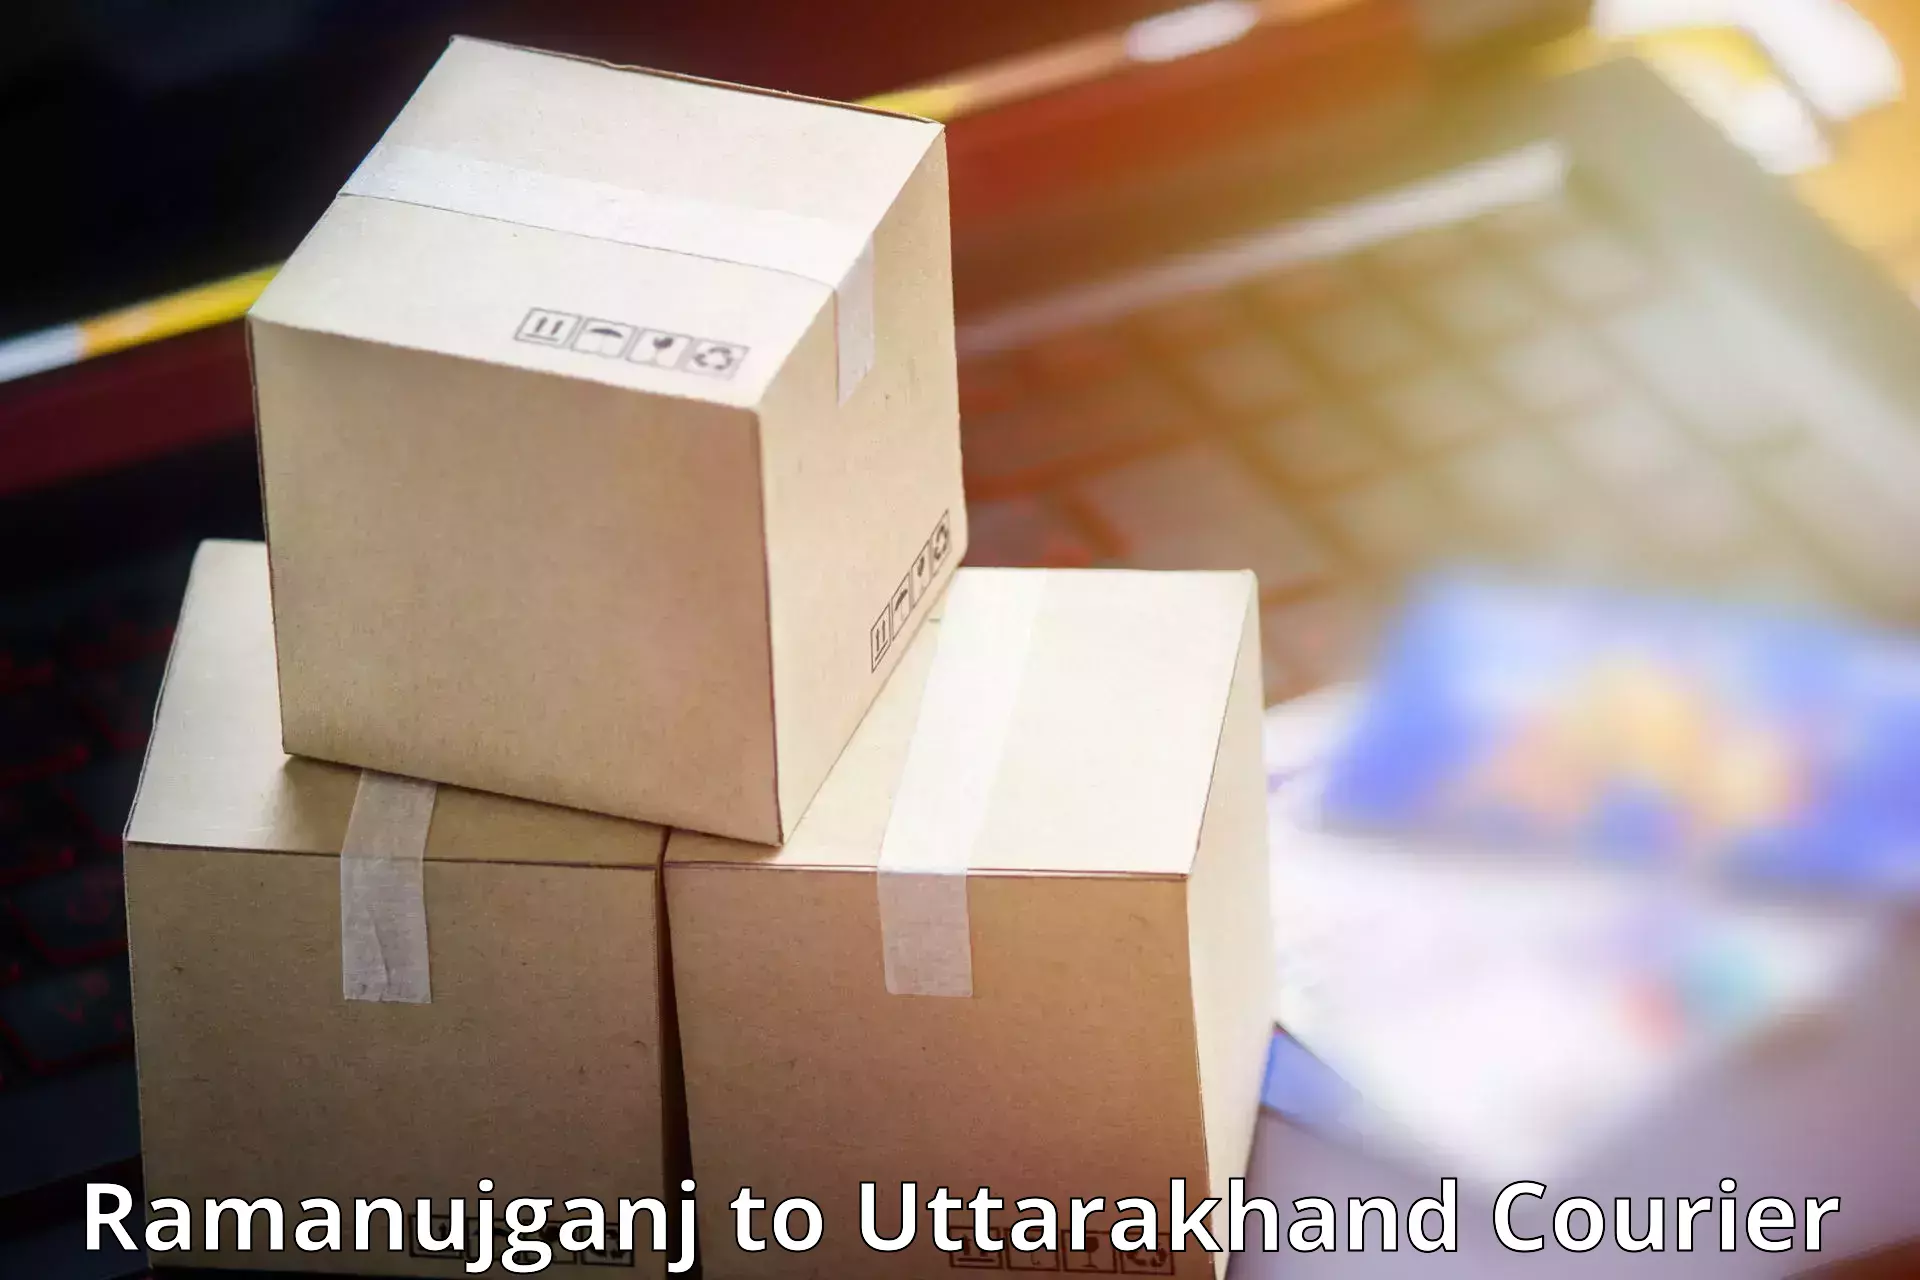 Lightweight parcel options Ramanujganj to Rishikesh